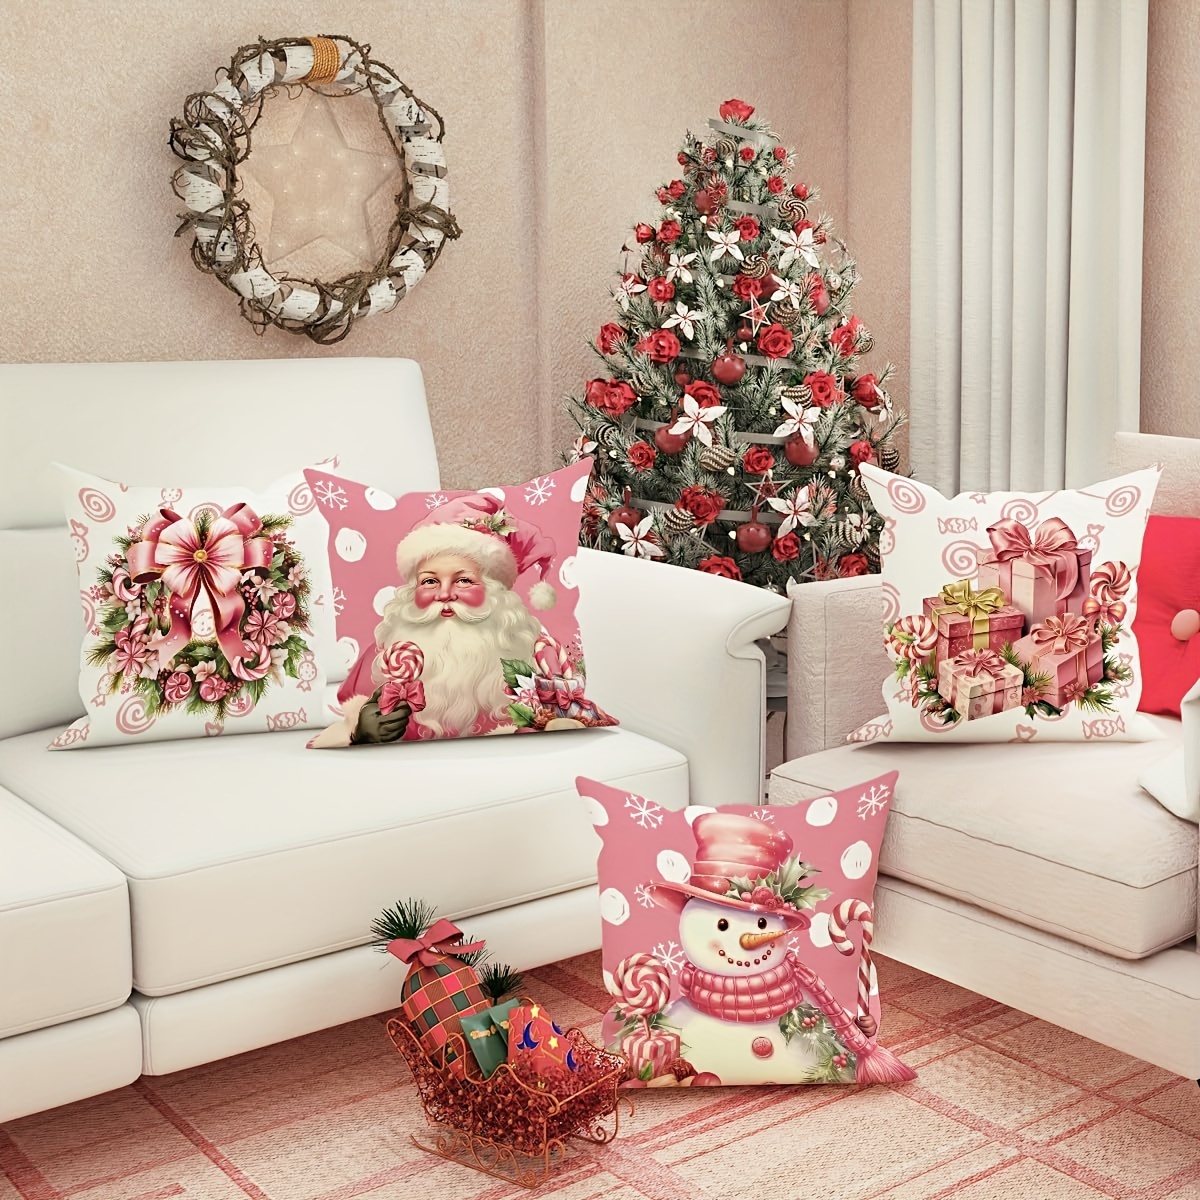 

4pcs Christmas Pillowcases 18x18" - Pink Santa & Snowman Wreath Design, Decorative Outdoor & Sofa Cushion Covers, Zip Closure, Machine Washable Polyester, Festive Home Decor Gift Set (no Insert)